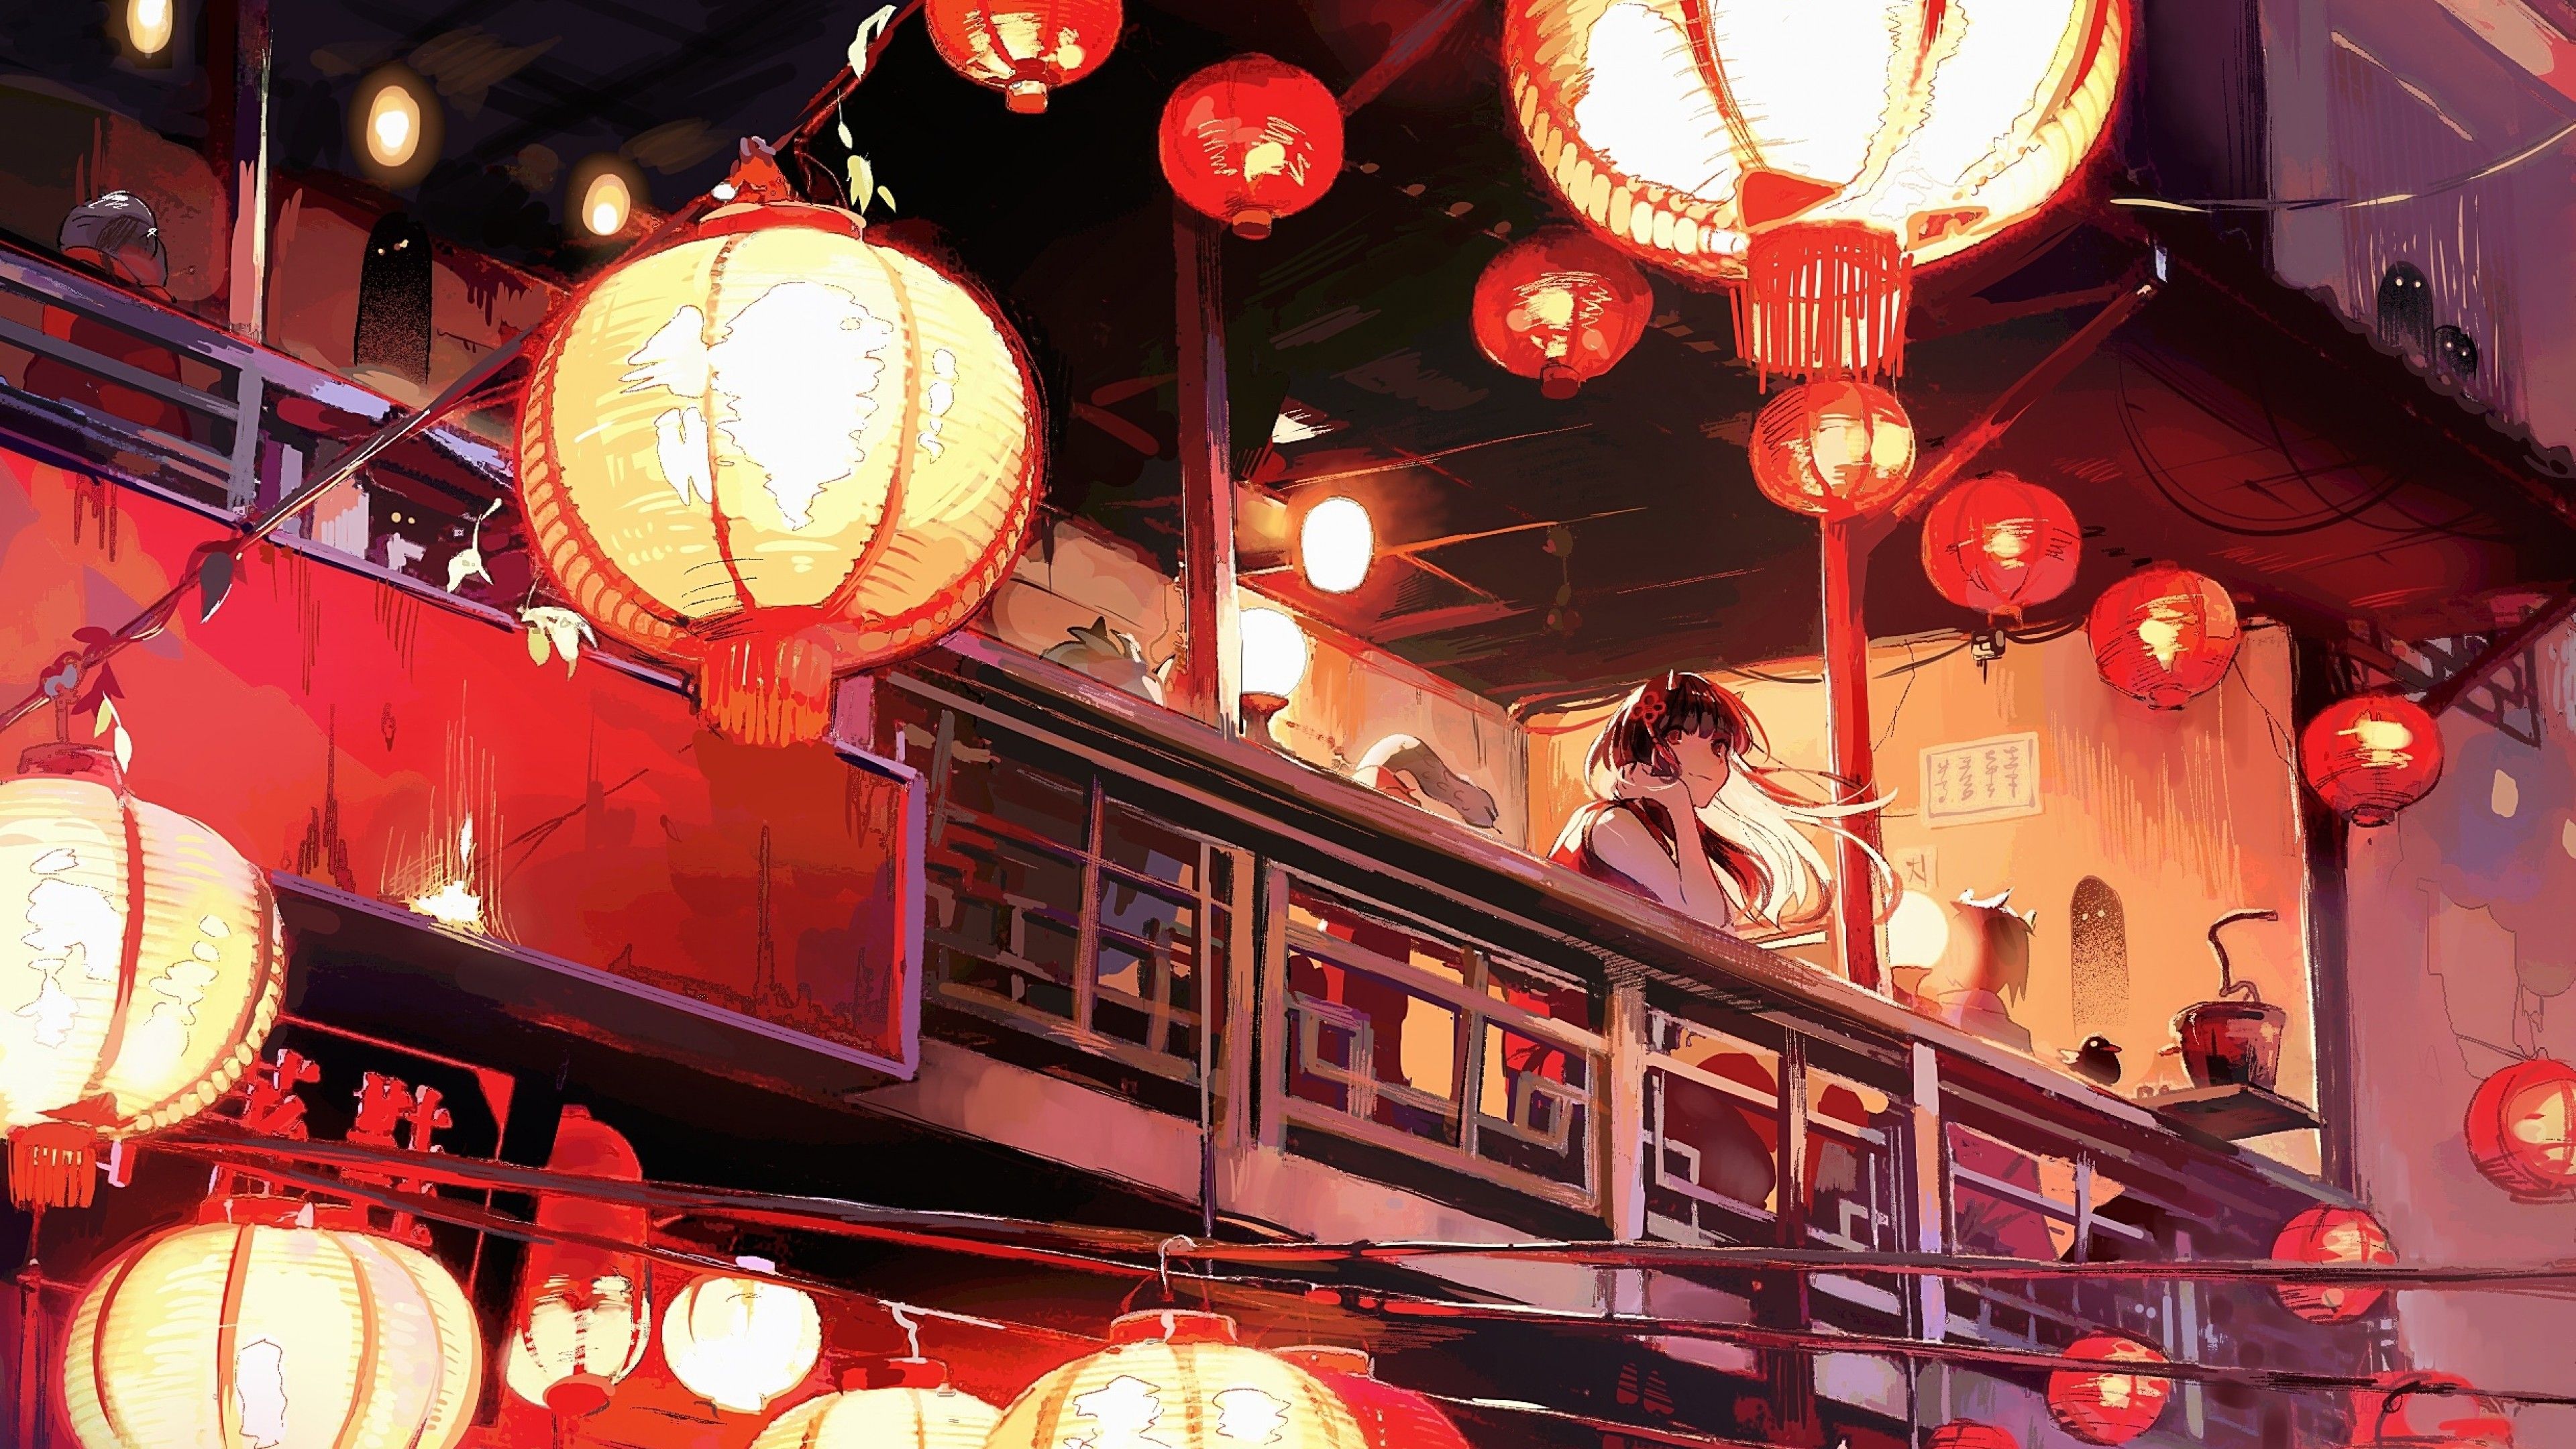 Download 3840x2160 Japanese Building, Anime Girl, Lanterns, Horns